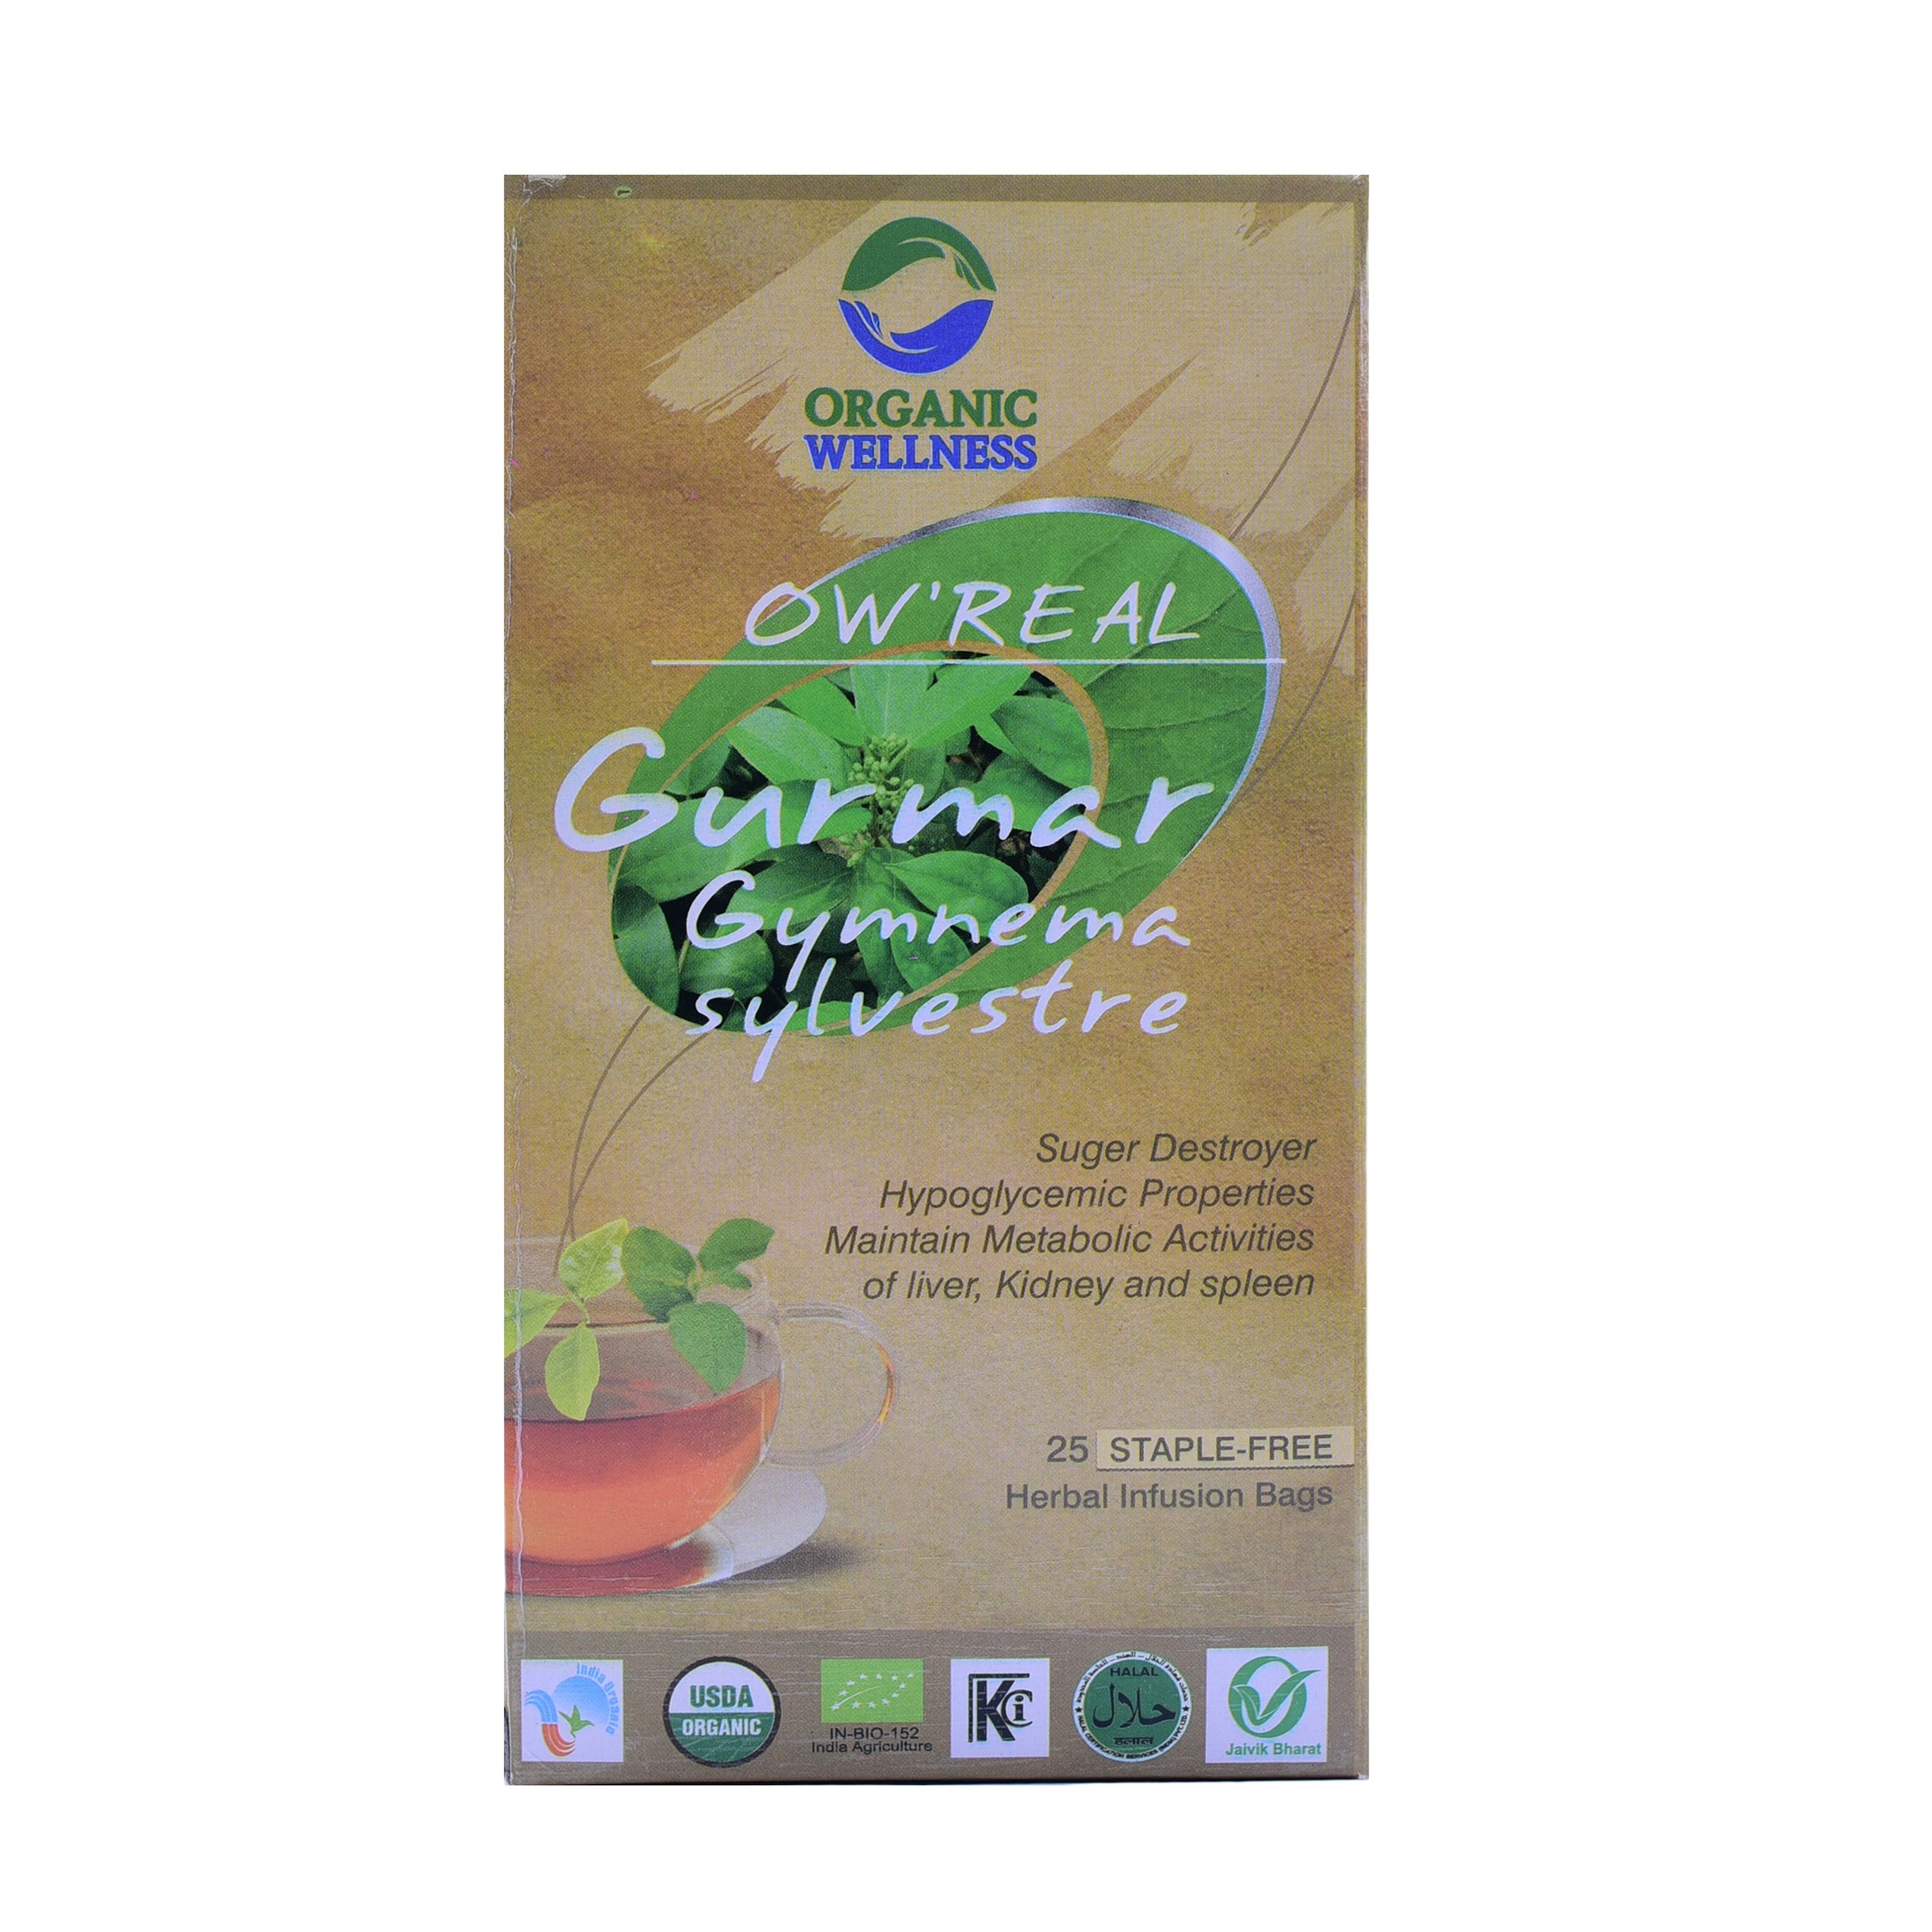 Organic Wellness Gurmar Gymnema Sylvestre Tea